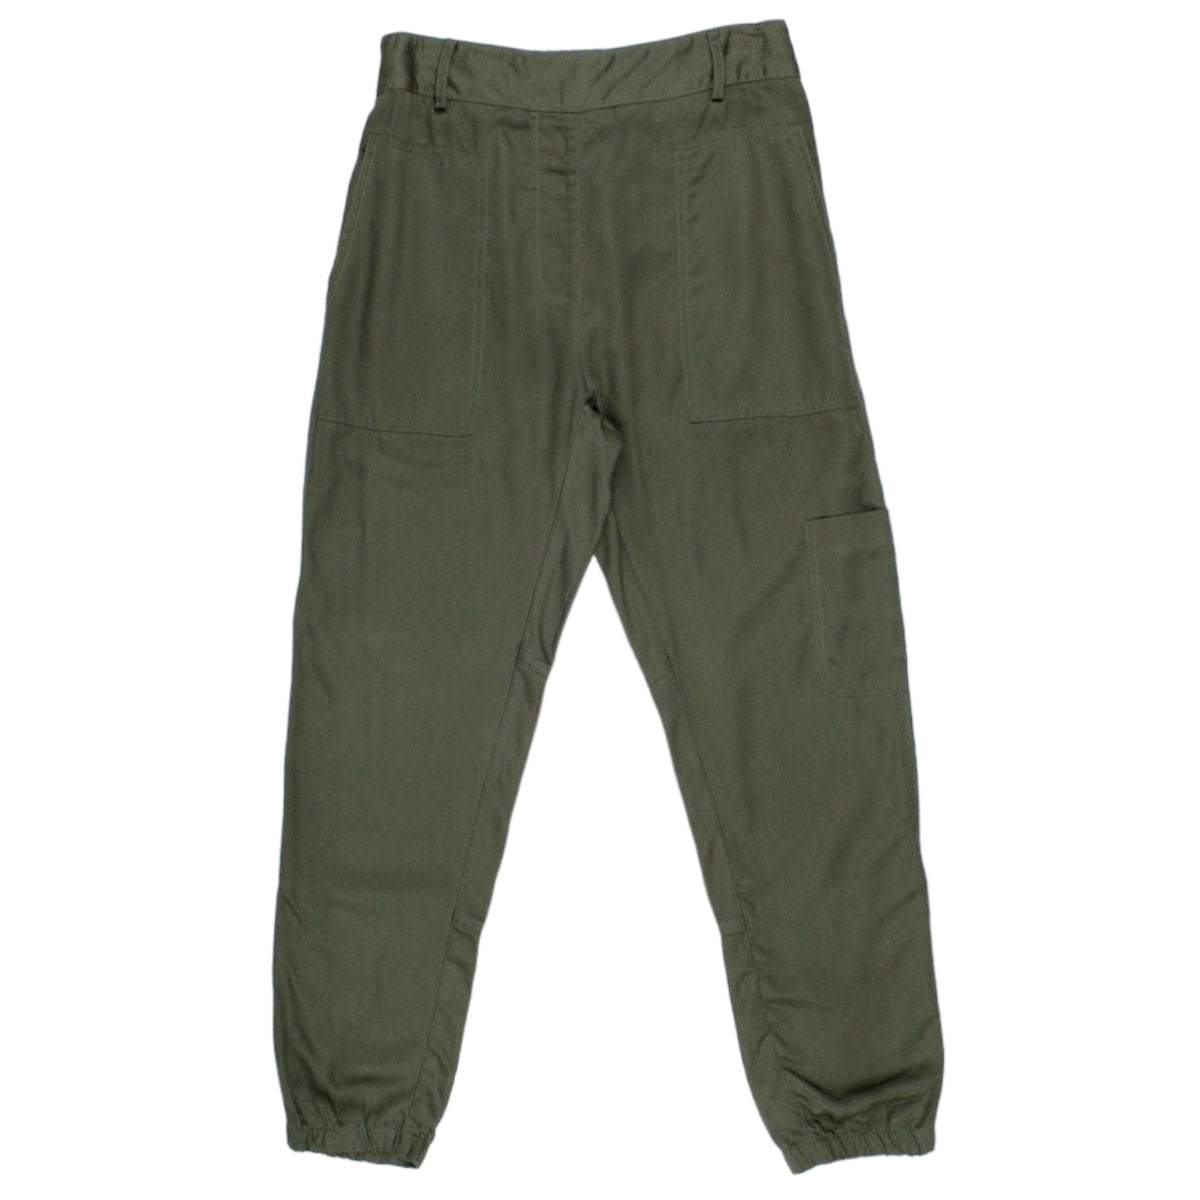 NRBY Khaki Cargo Pants - Sample